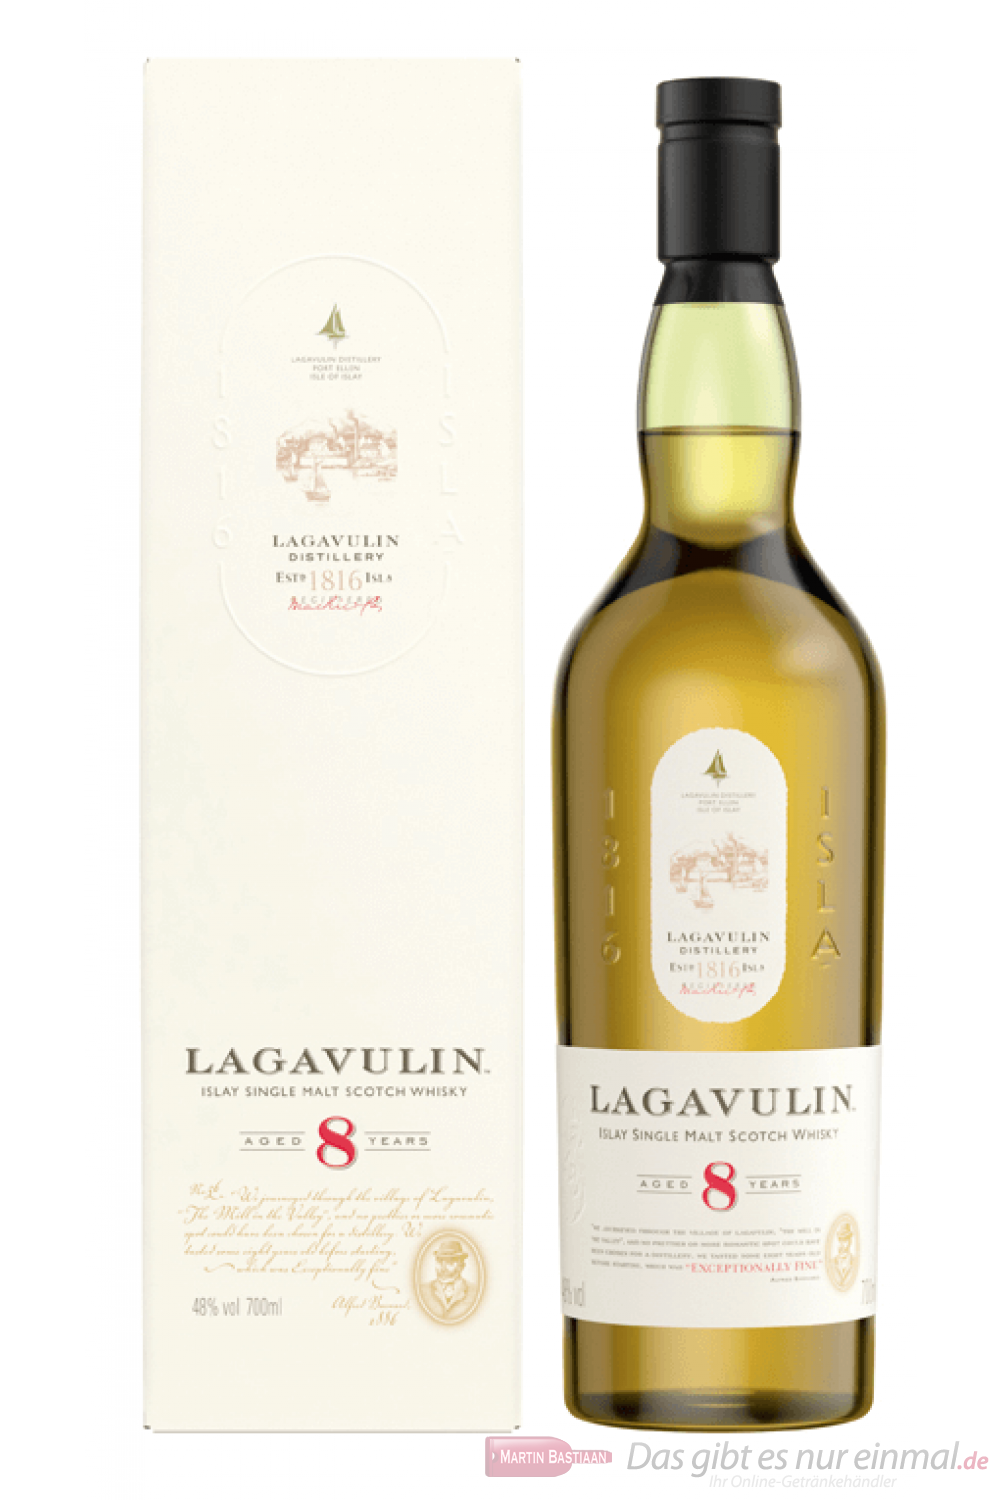 Lagavulin 8 years Single Malt Scotch Whisky 0,7l